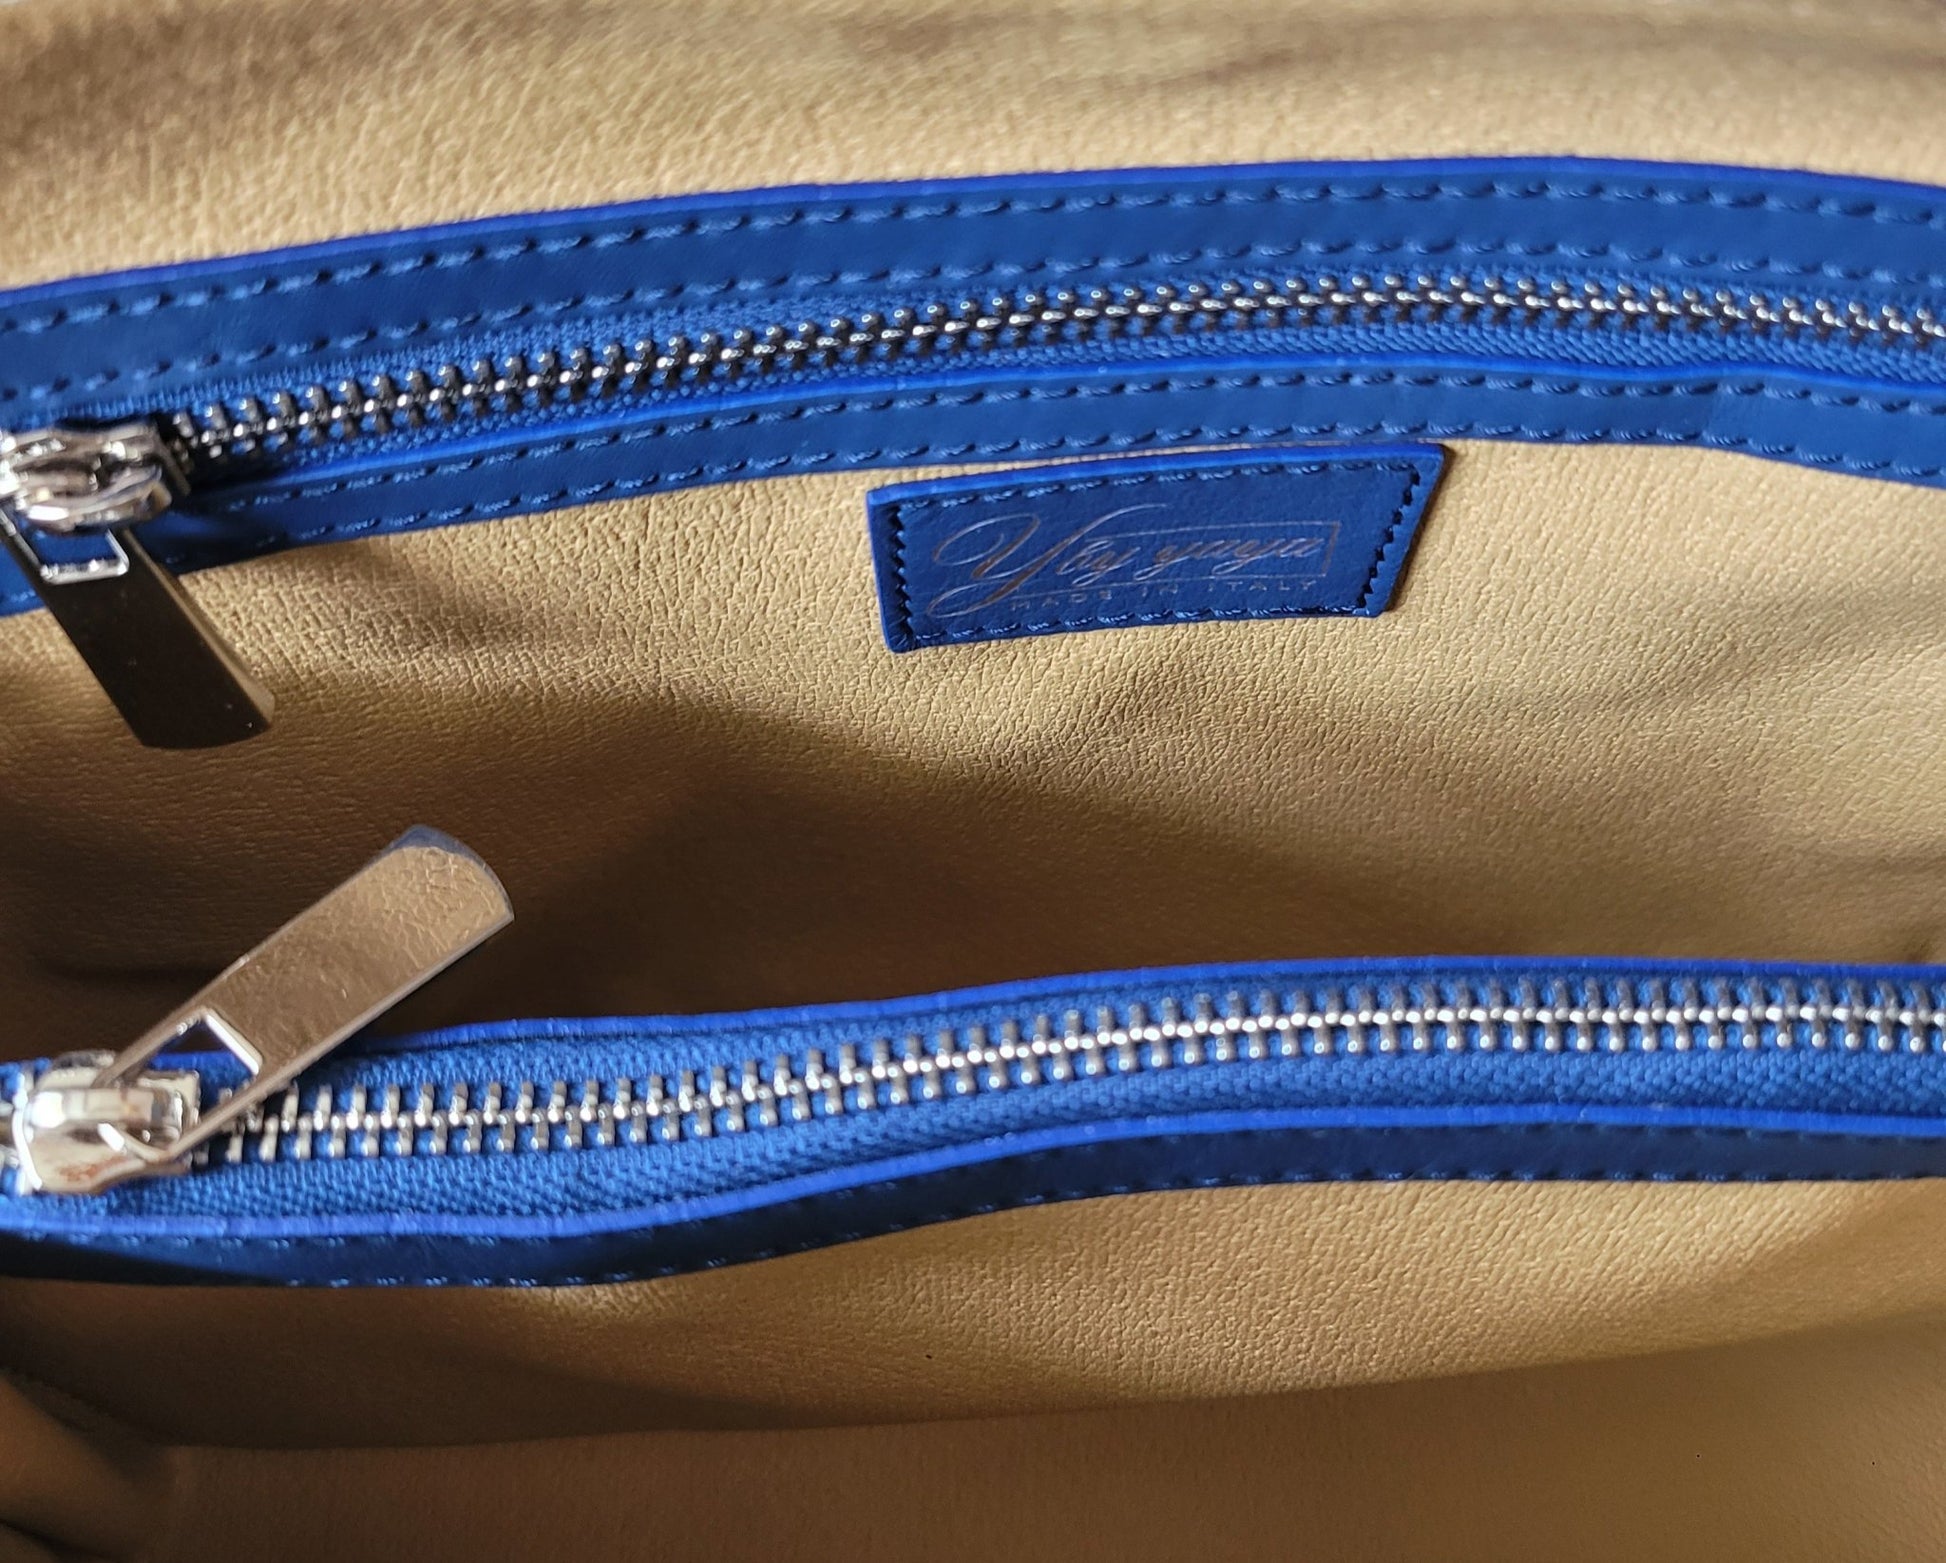 Y by Yaya Blueberry Crossbody - Yaya's Luxe Handbags - Handbags